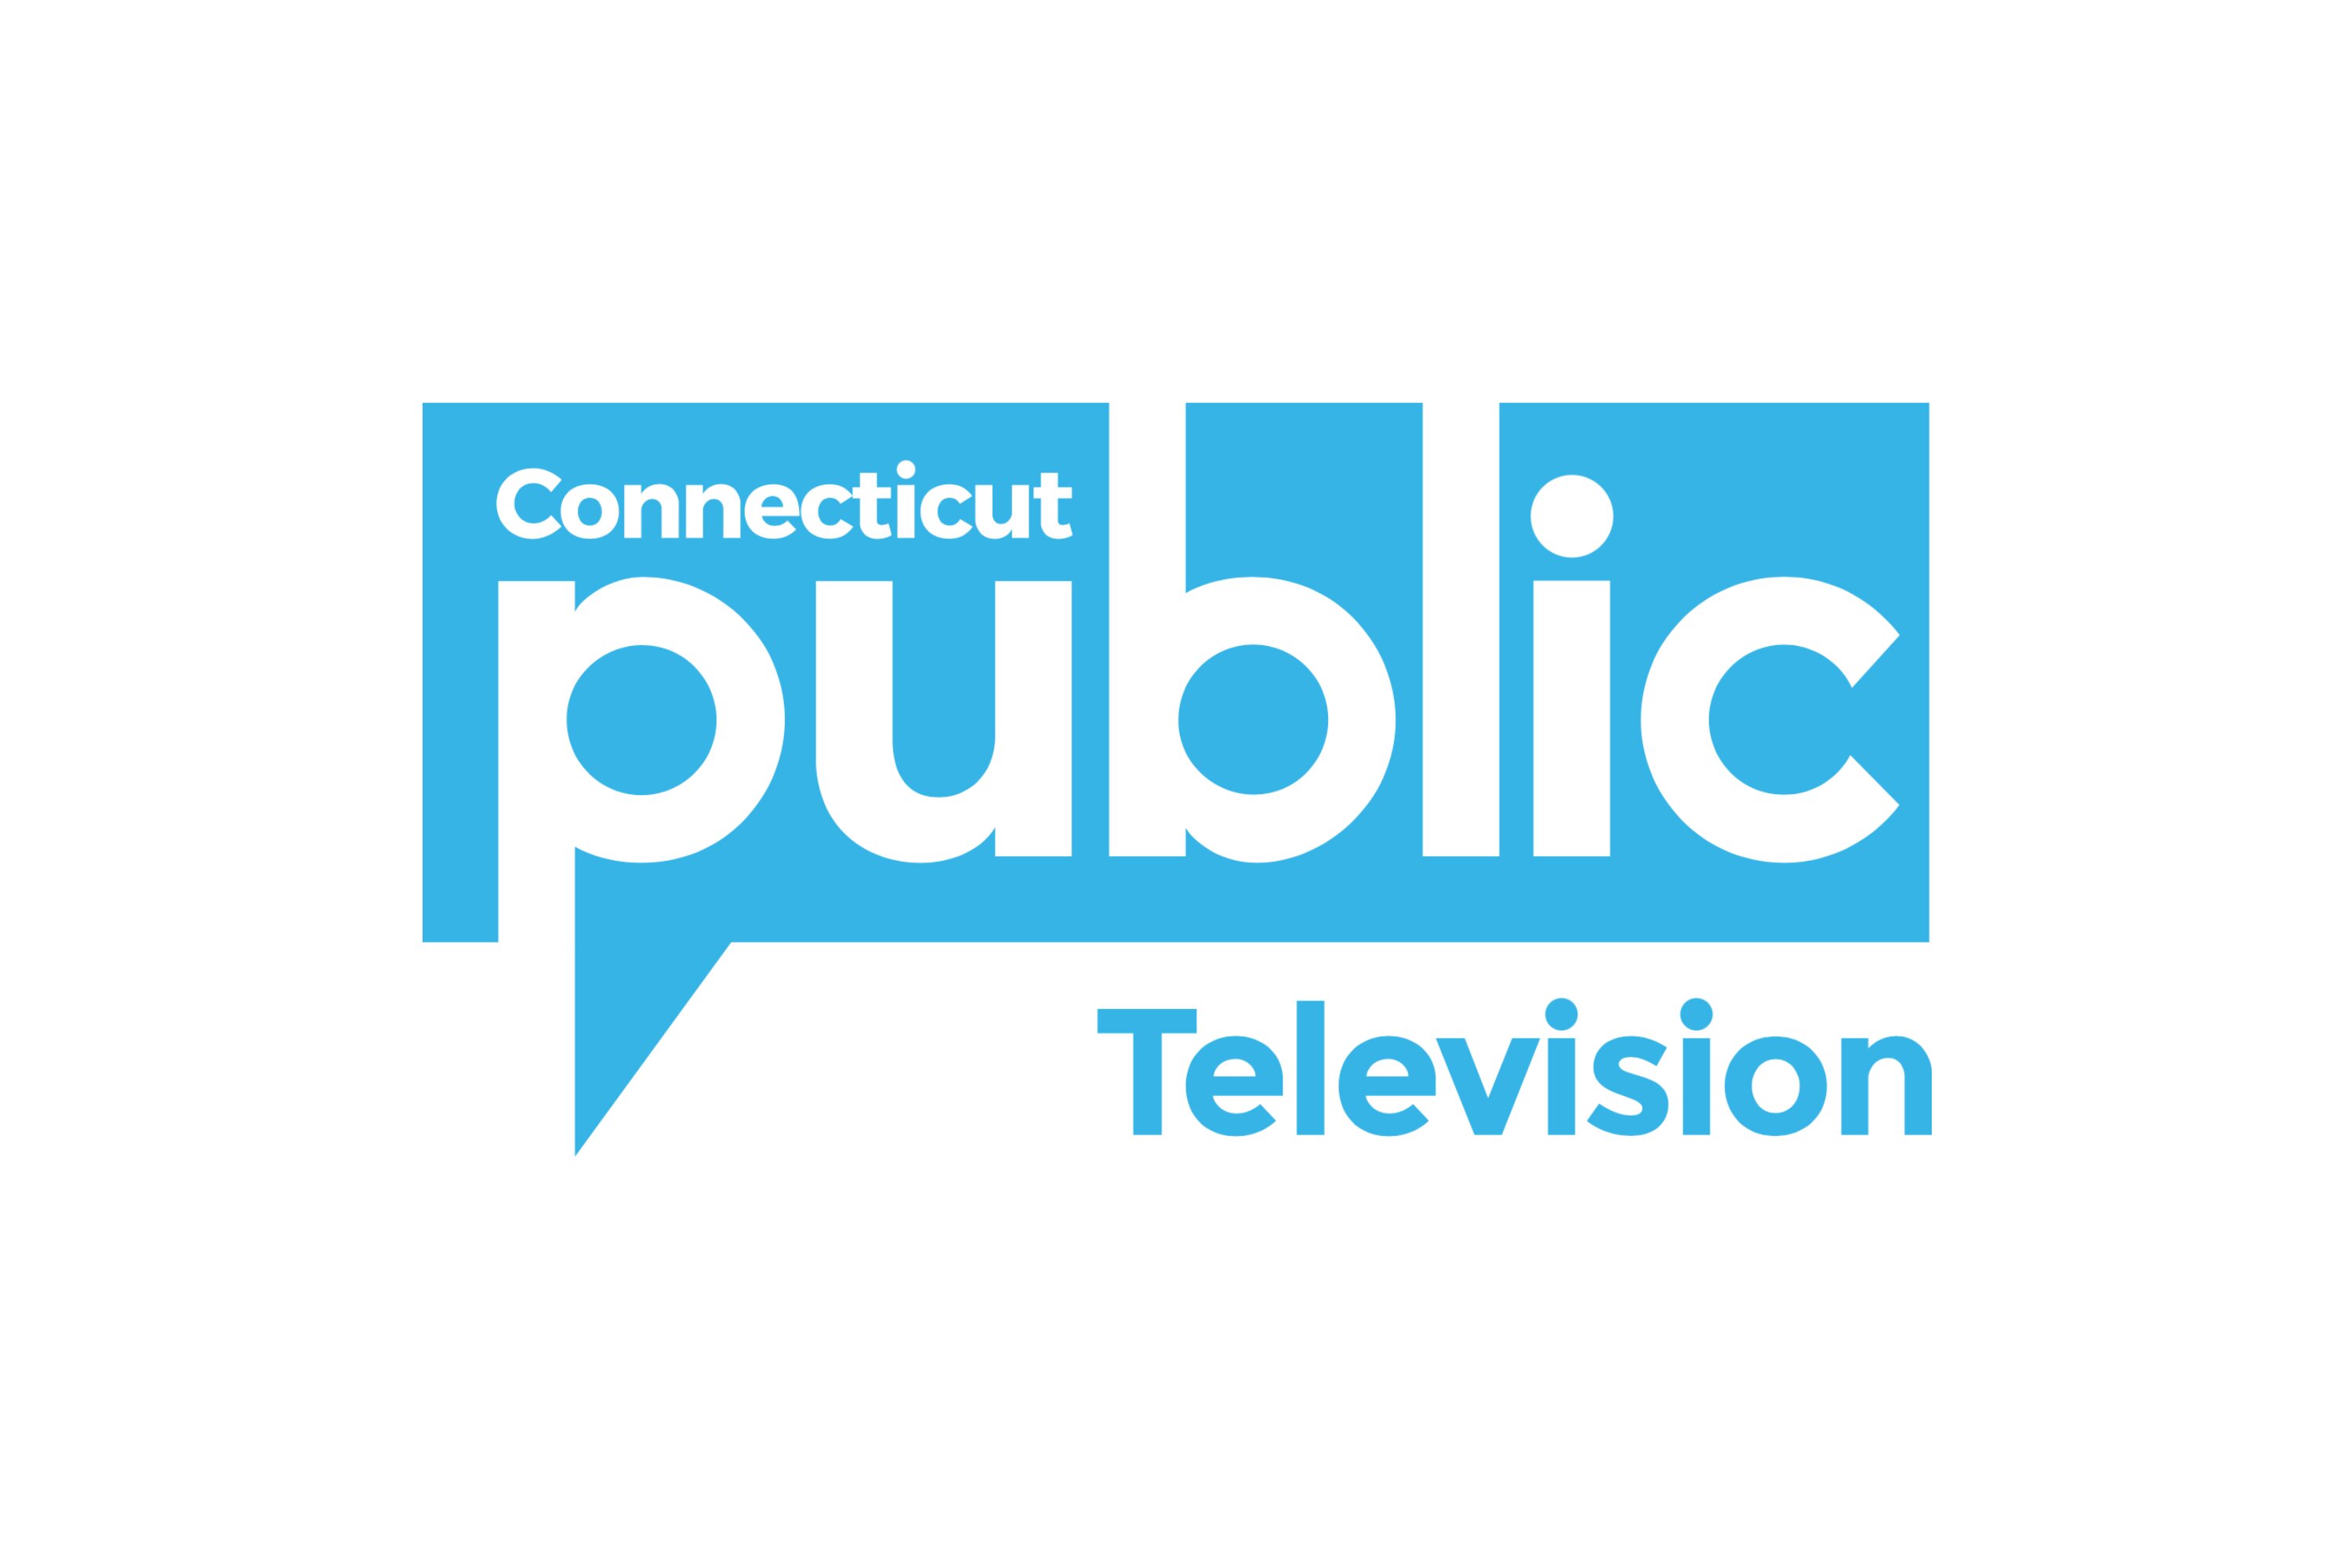 Public tv. American public Television. CT Company. GM Connecticut & Production logo. Milwaukee public Television logo 2003.